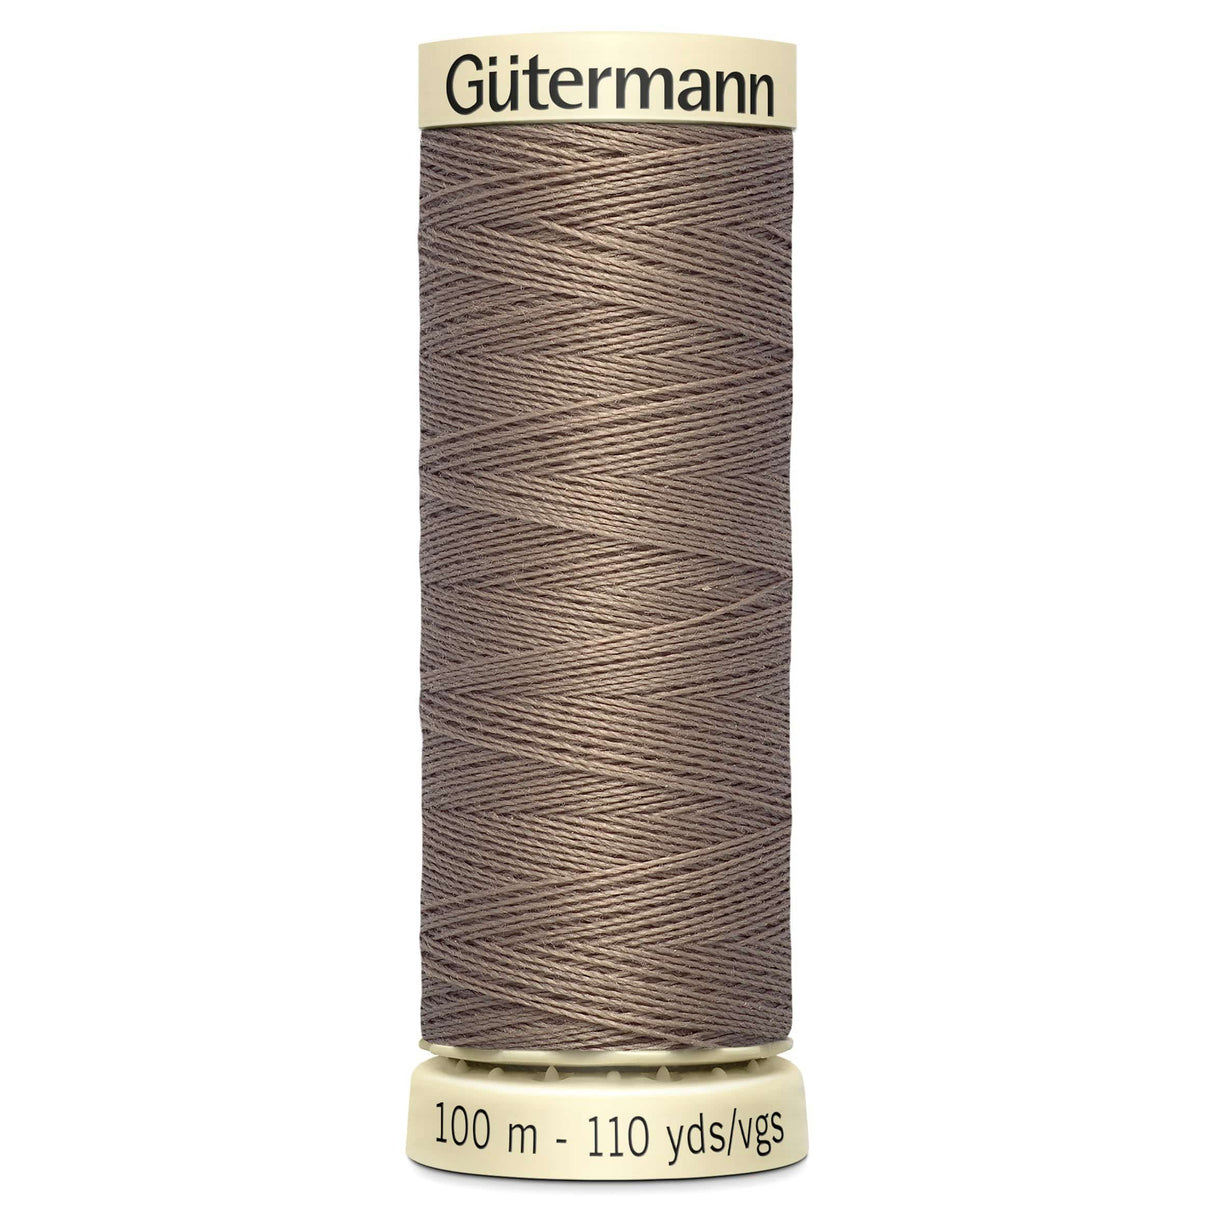 Groves Haberdashery 199 Gutermann Thread Sewing Cotton 100 m Black to Pink